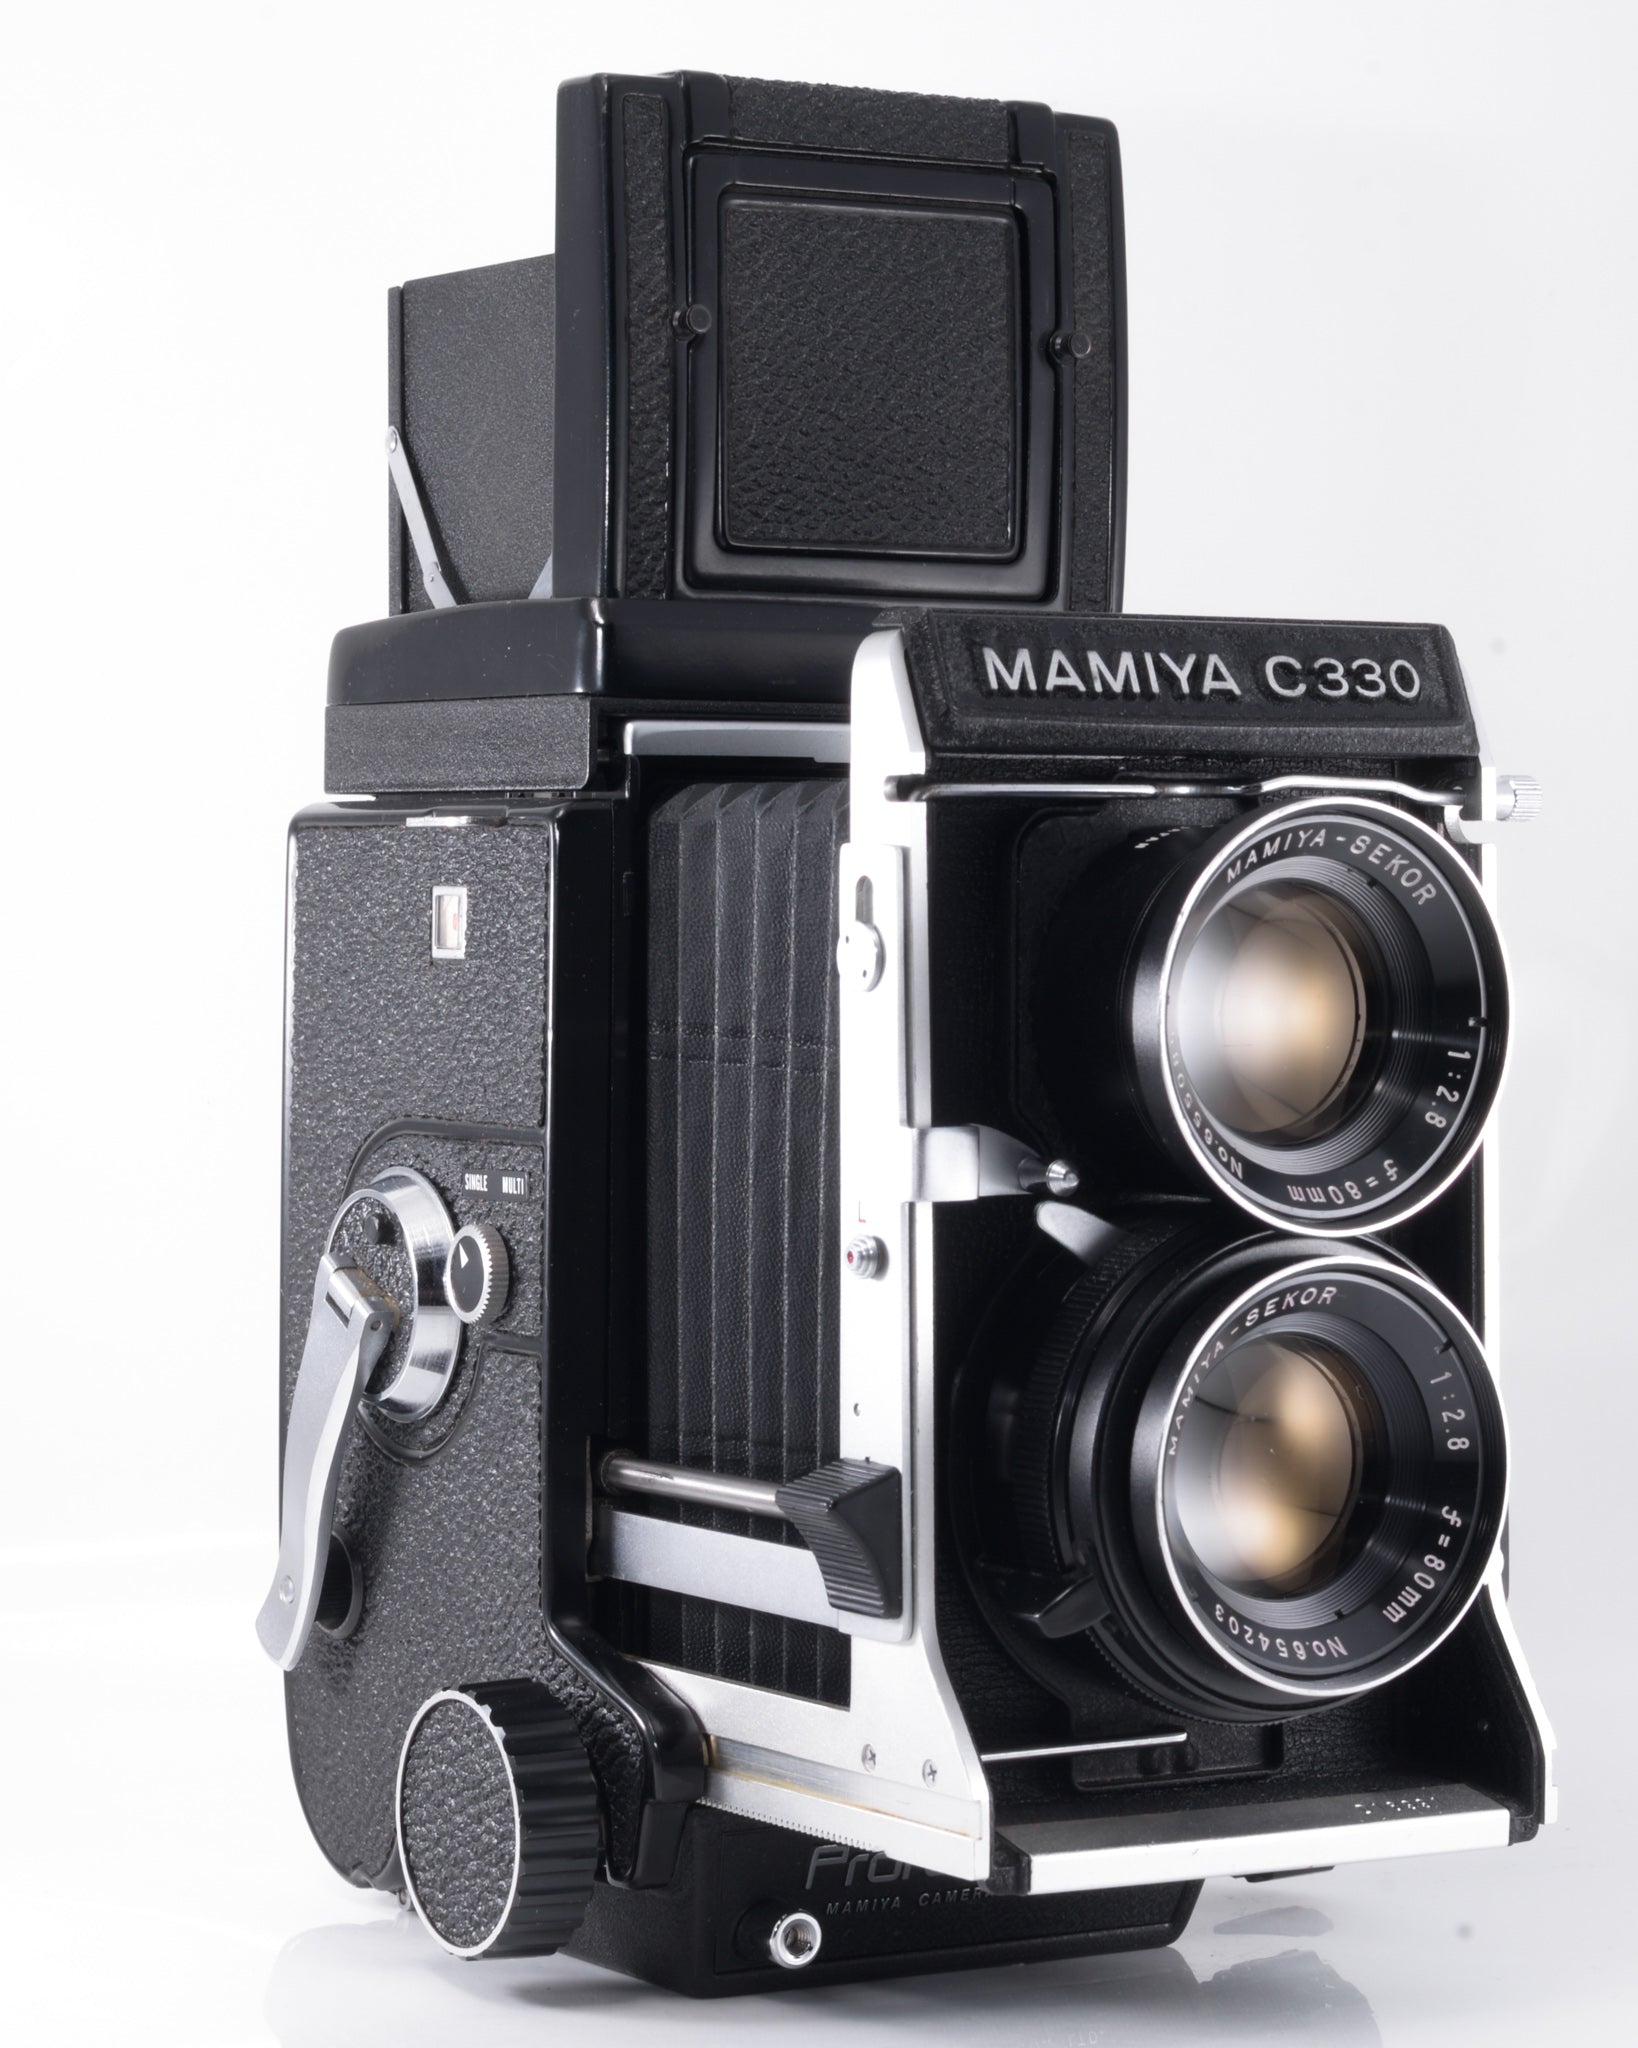 Appareil photo TLR moyen format Mamiya C330 avec 80 mm f2.8 objectif